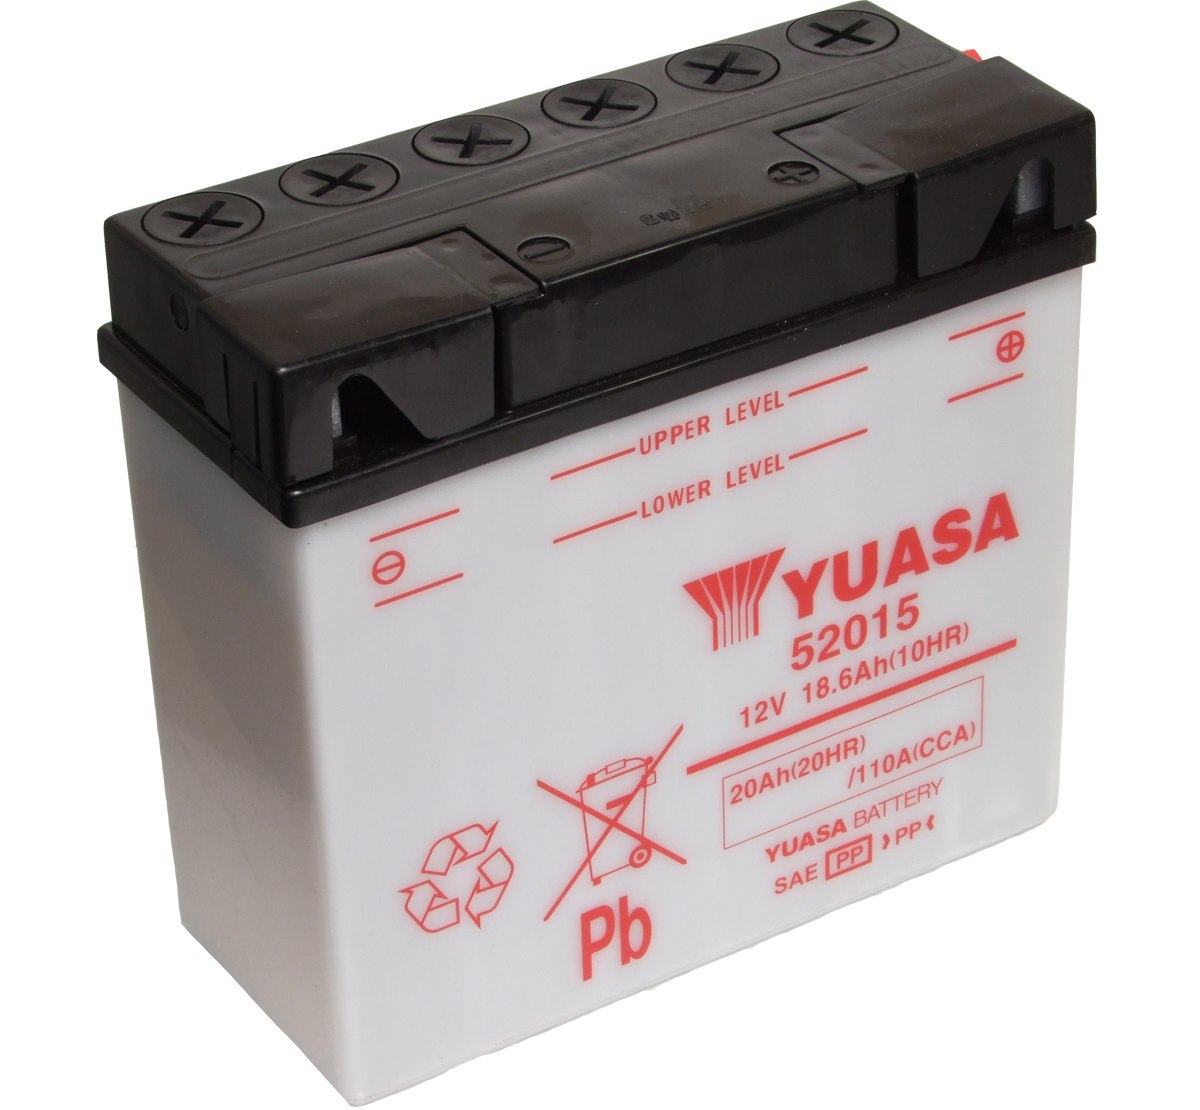 Yuasa 52015 12V Motorcycle Battery